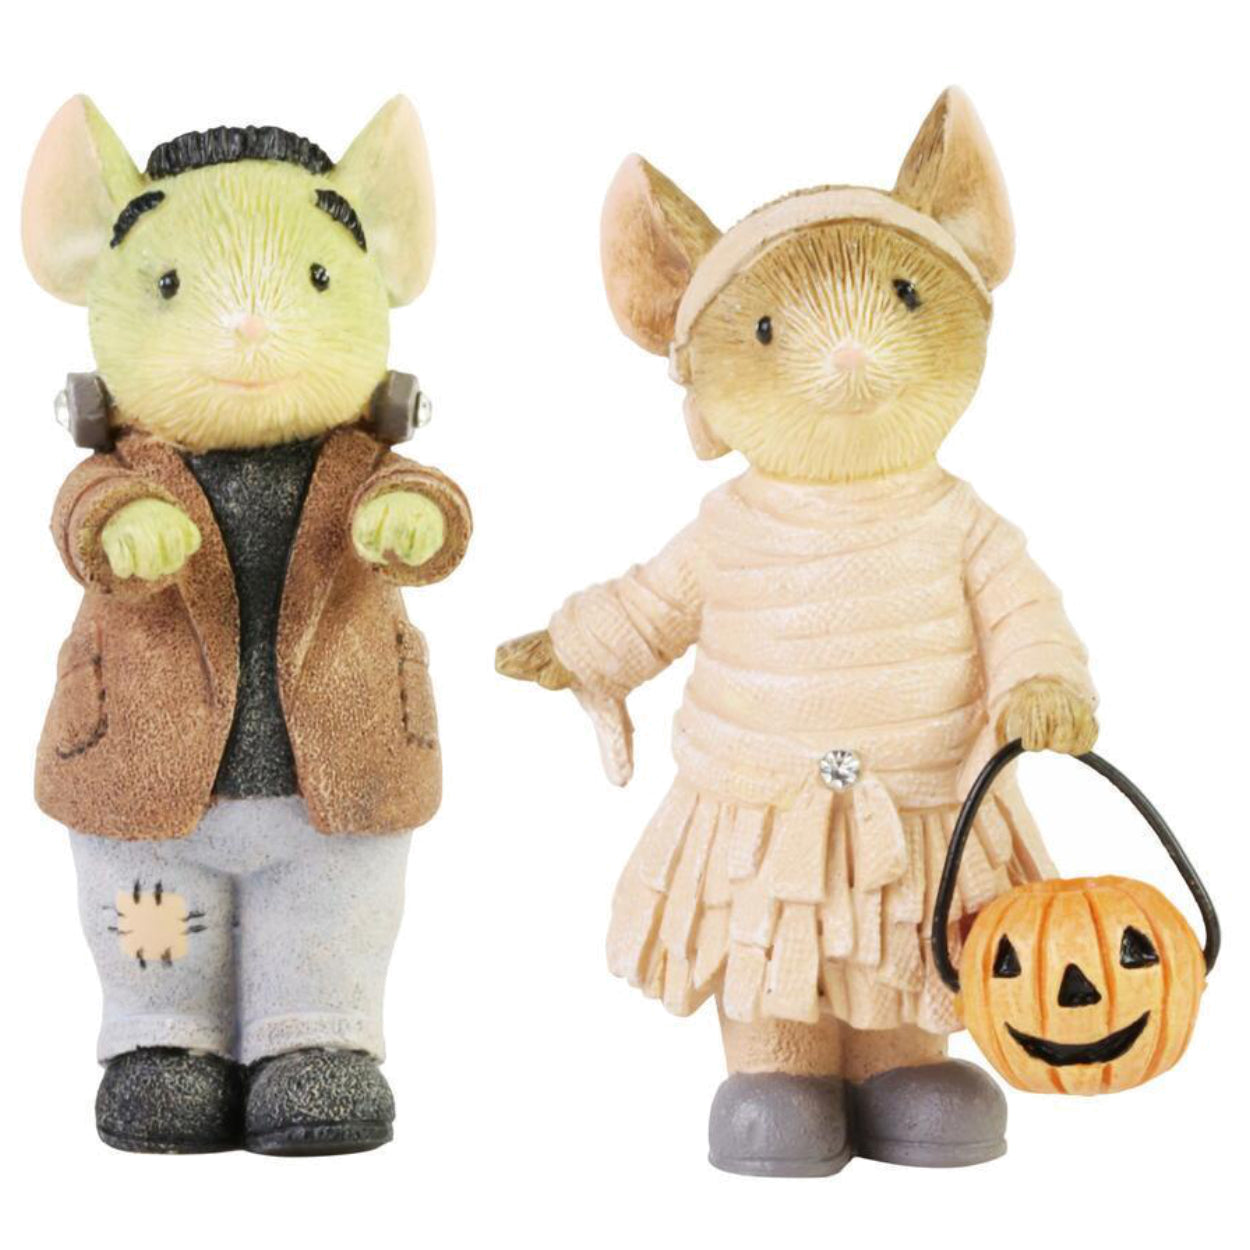 Mummy & Frankenstein Mouse Halloween Costumes